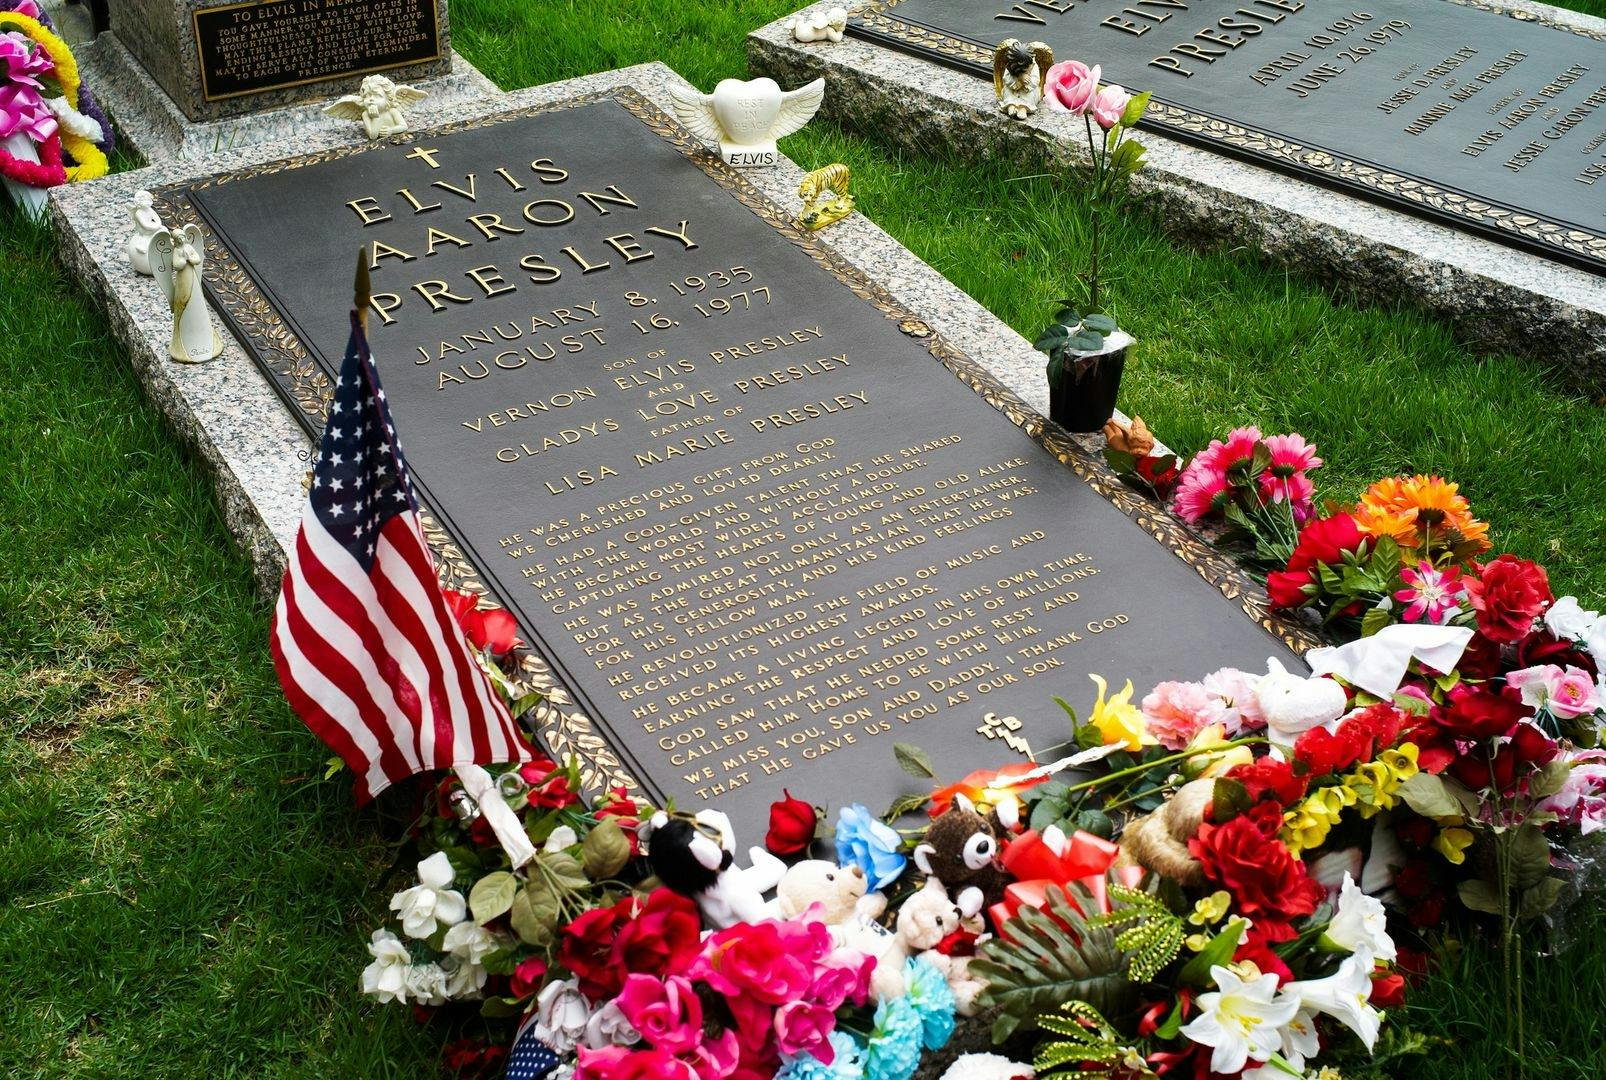 Tour audio autoguidato del cimitero di Chicago Graceland